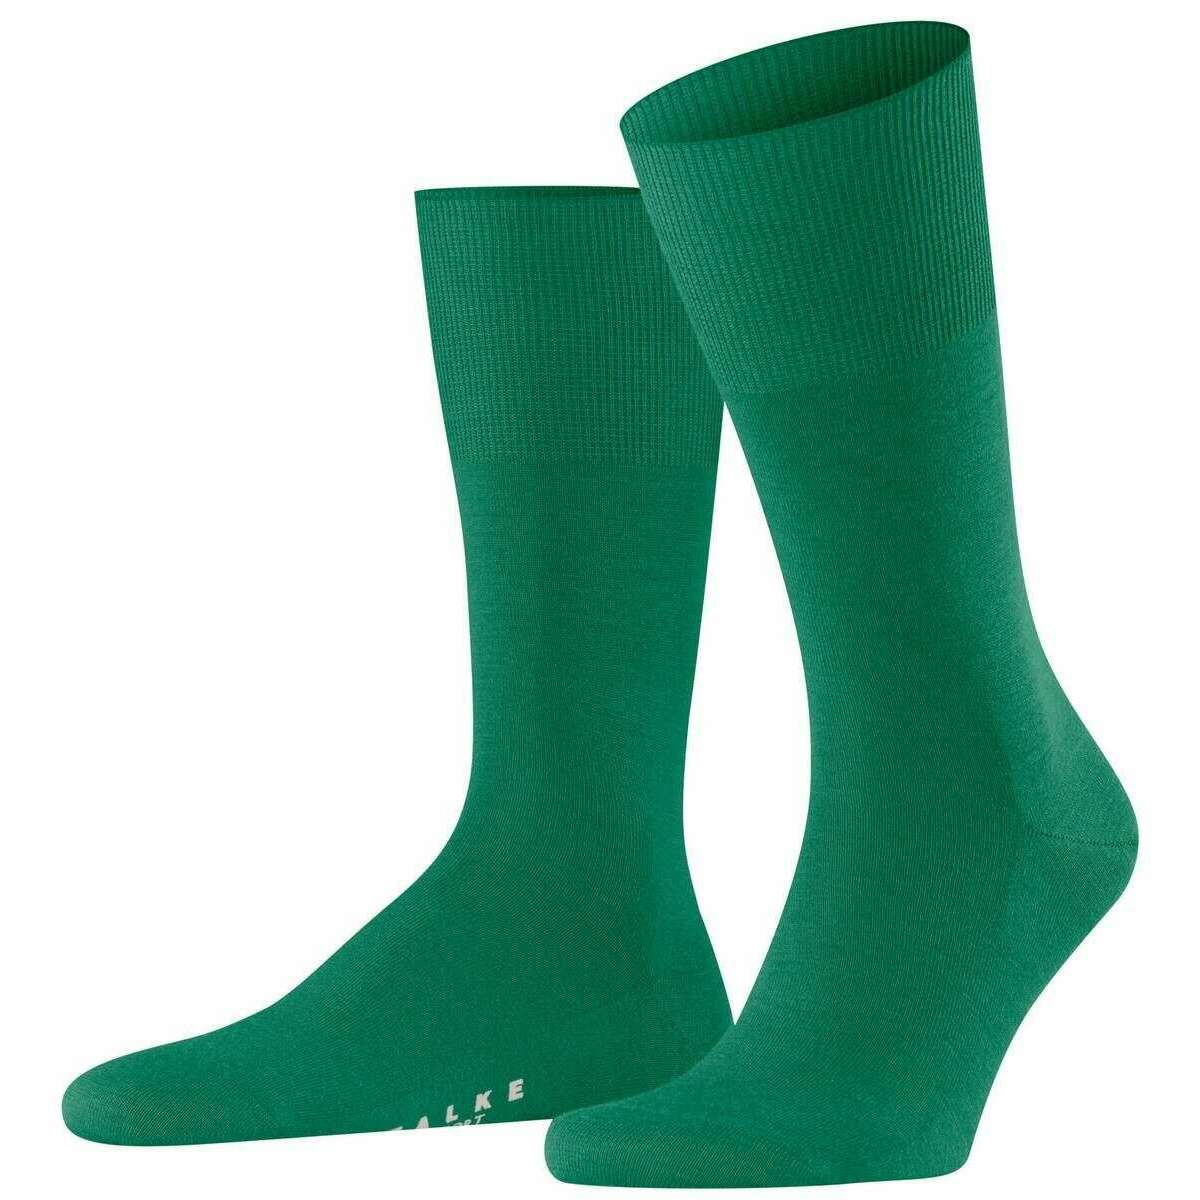 Falke Airport Socks - Emerald Green